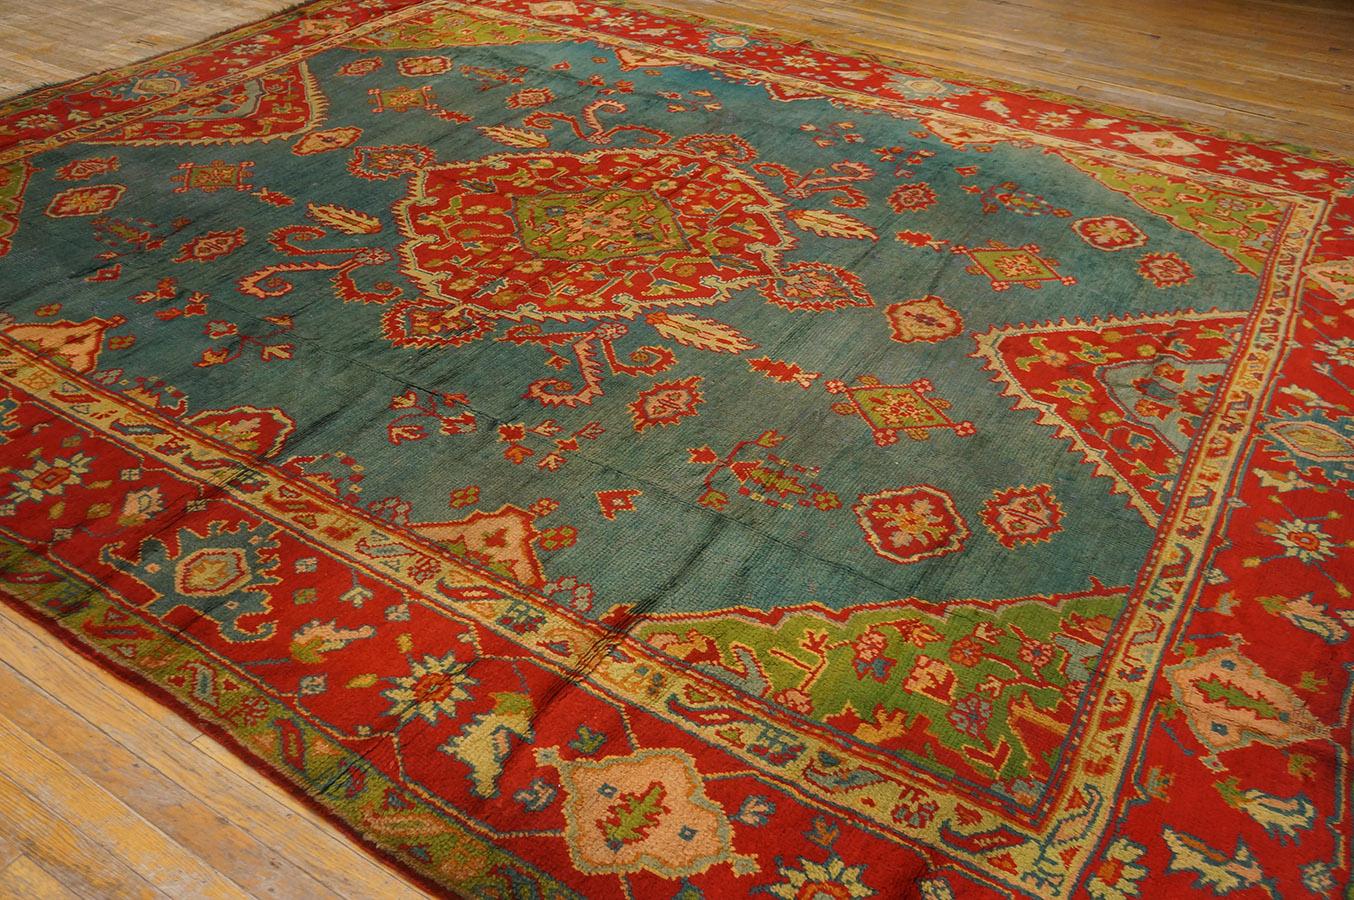 Late 19th Century Turkish Oushak Carpet ( 11' 2'' x 13' 1'' - 340 x 398 cm ) For Sale 8